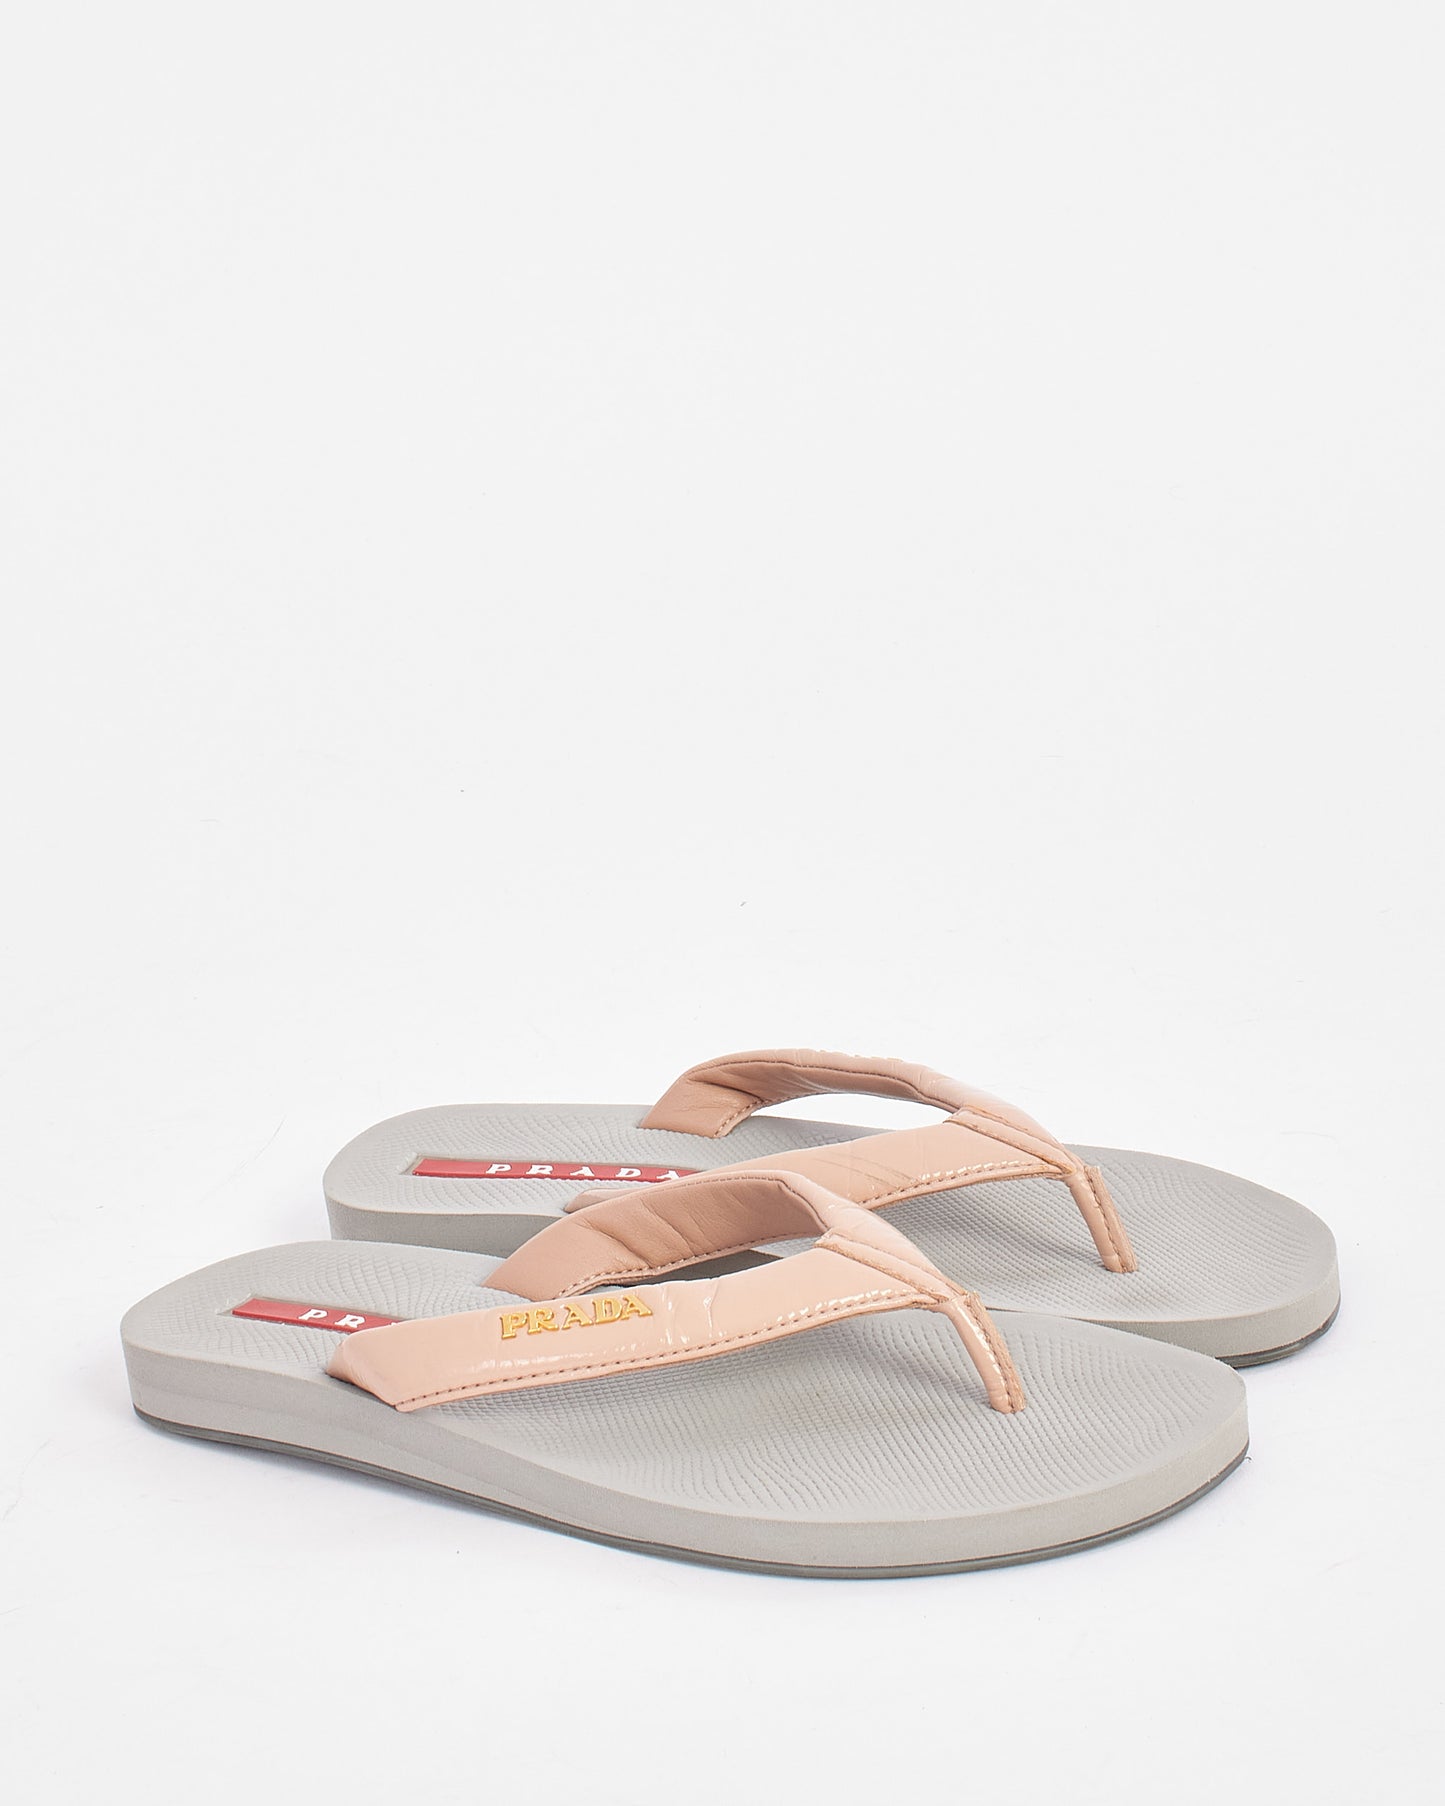 Prada Nude Patent Leather Flip Flop Sandals - 35